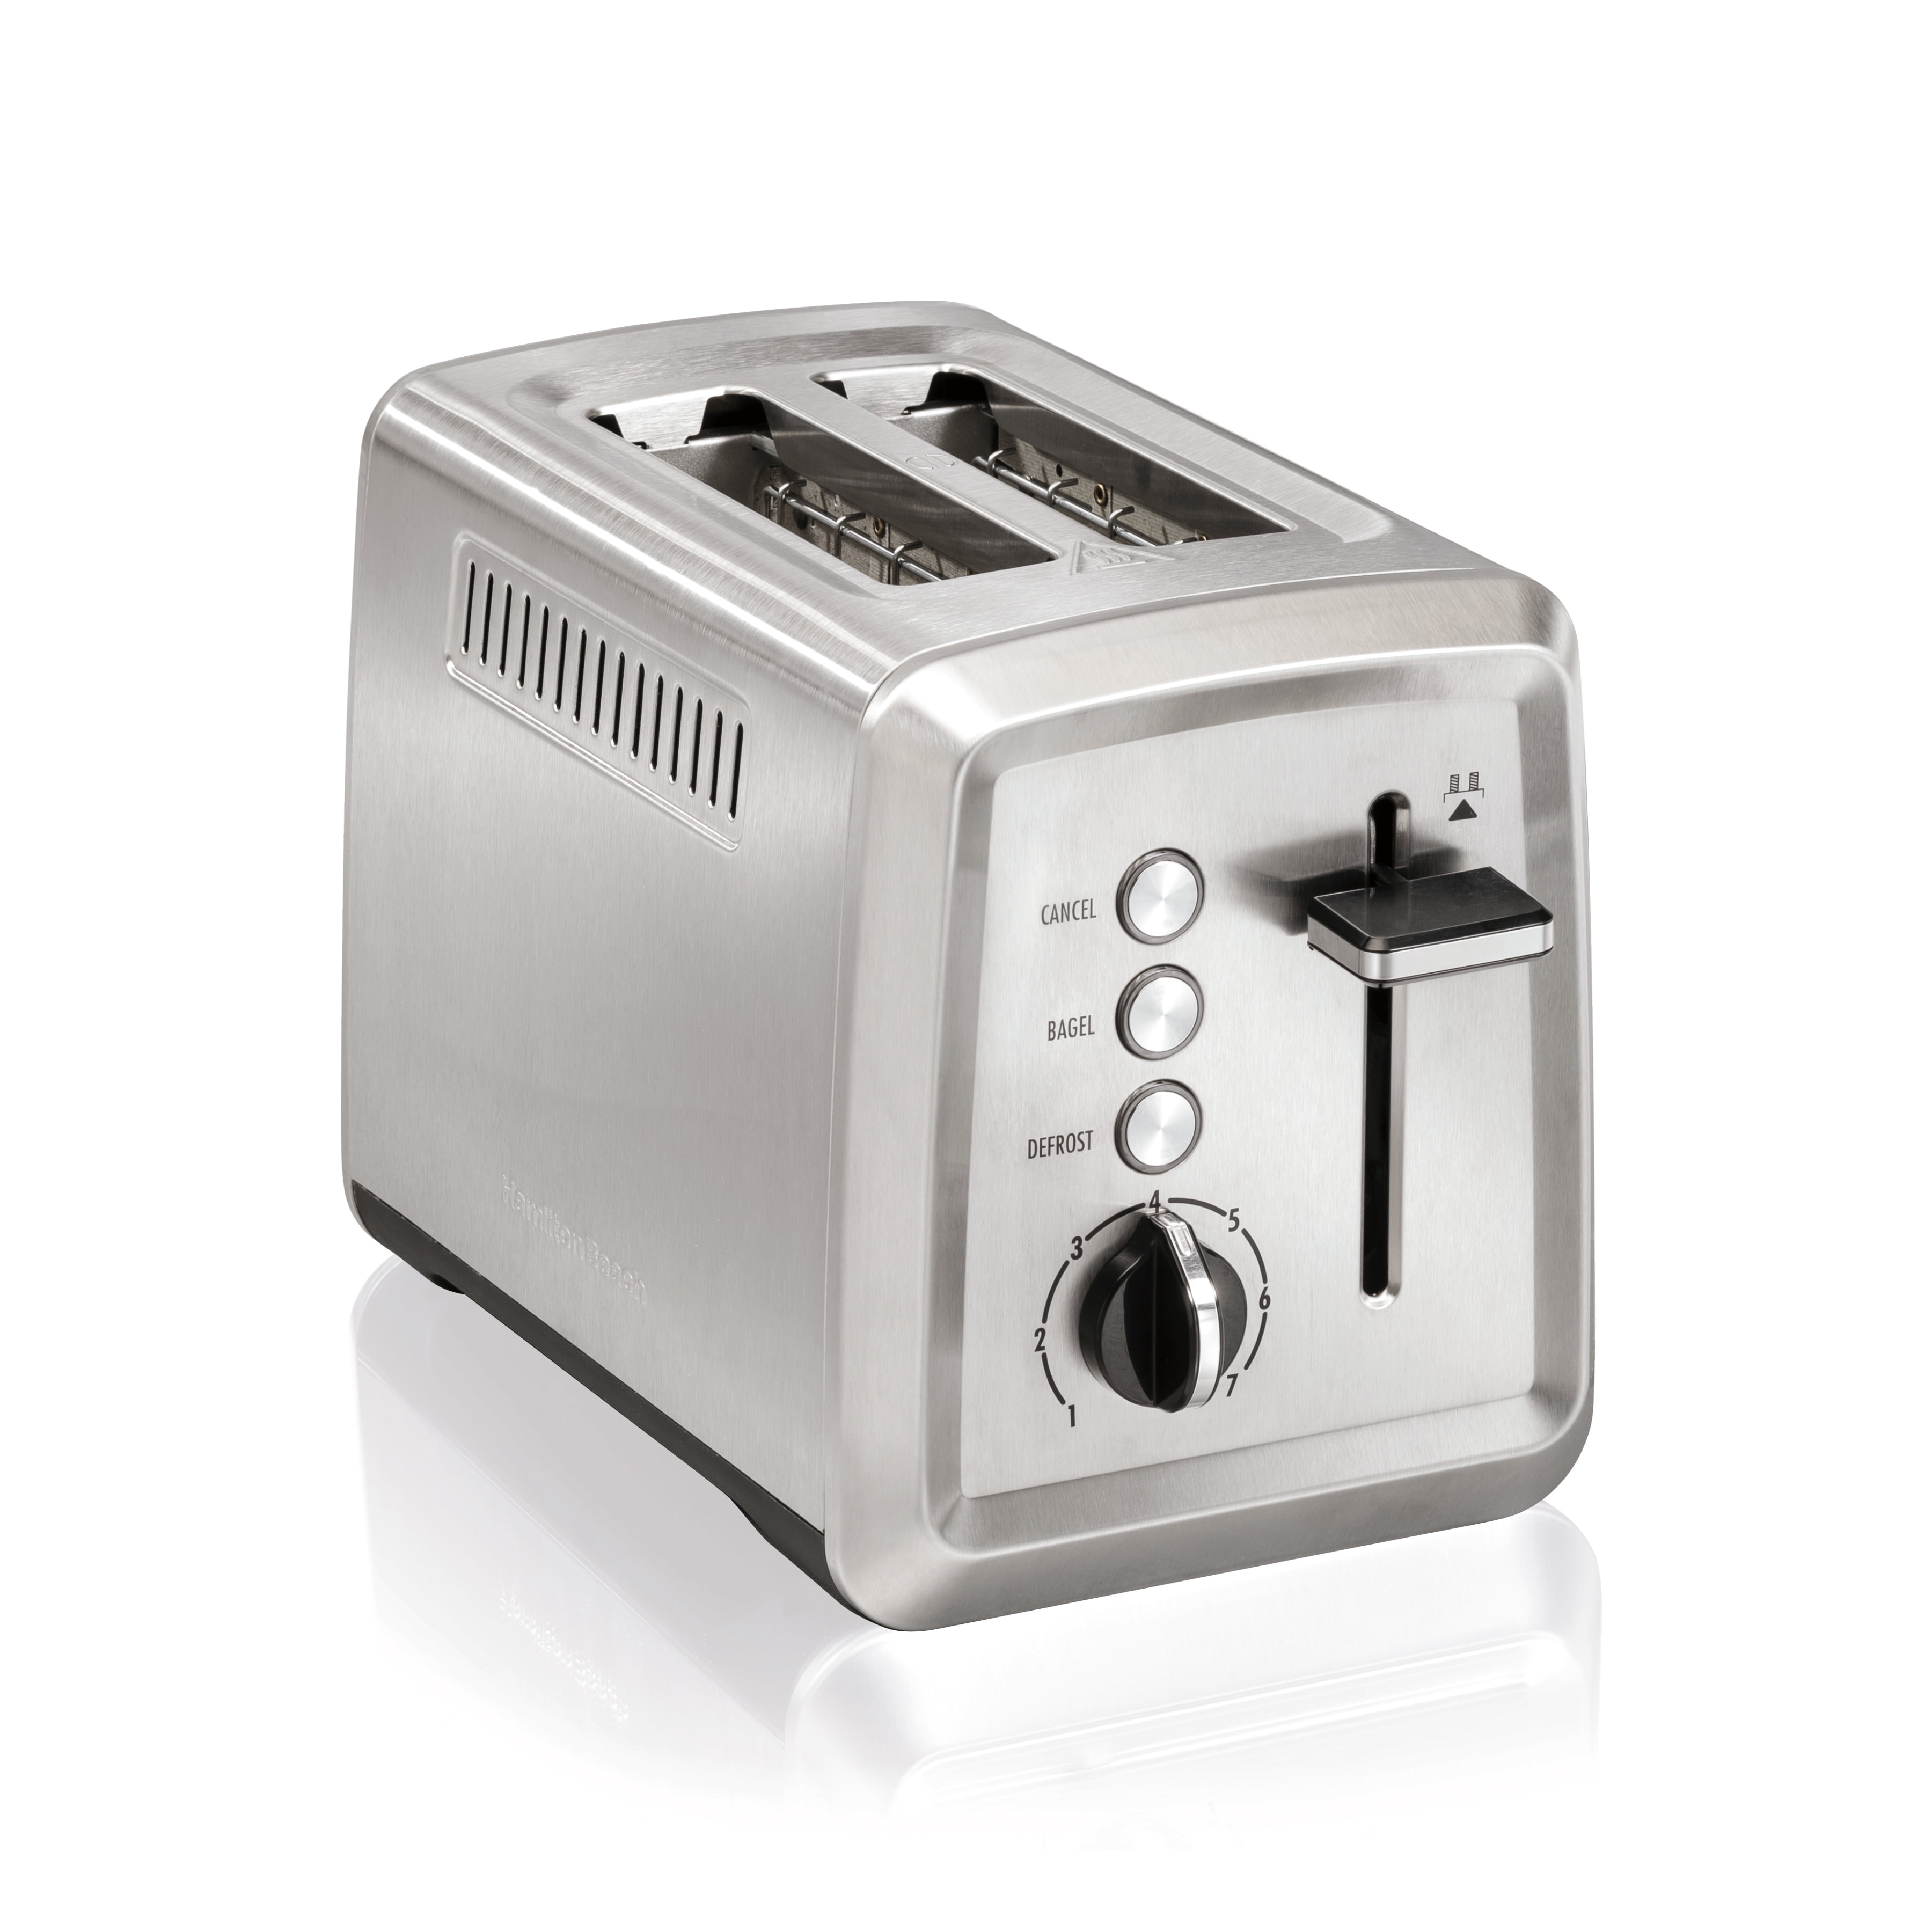 2-Slice Stainless Steel Toaster, Wide Slots